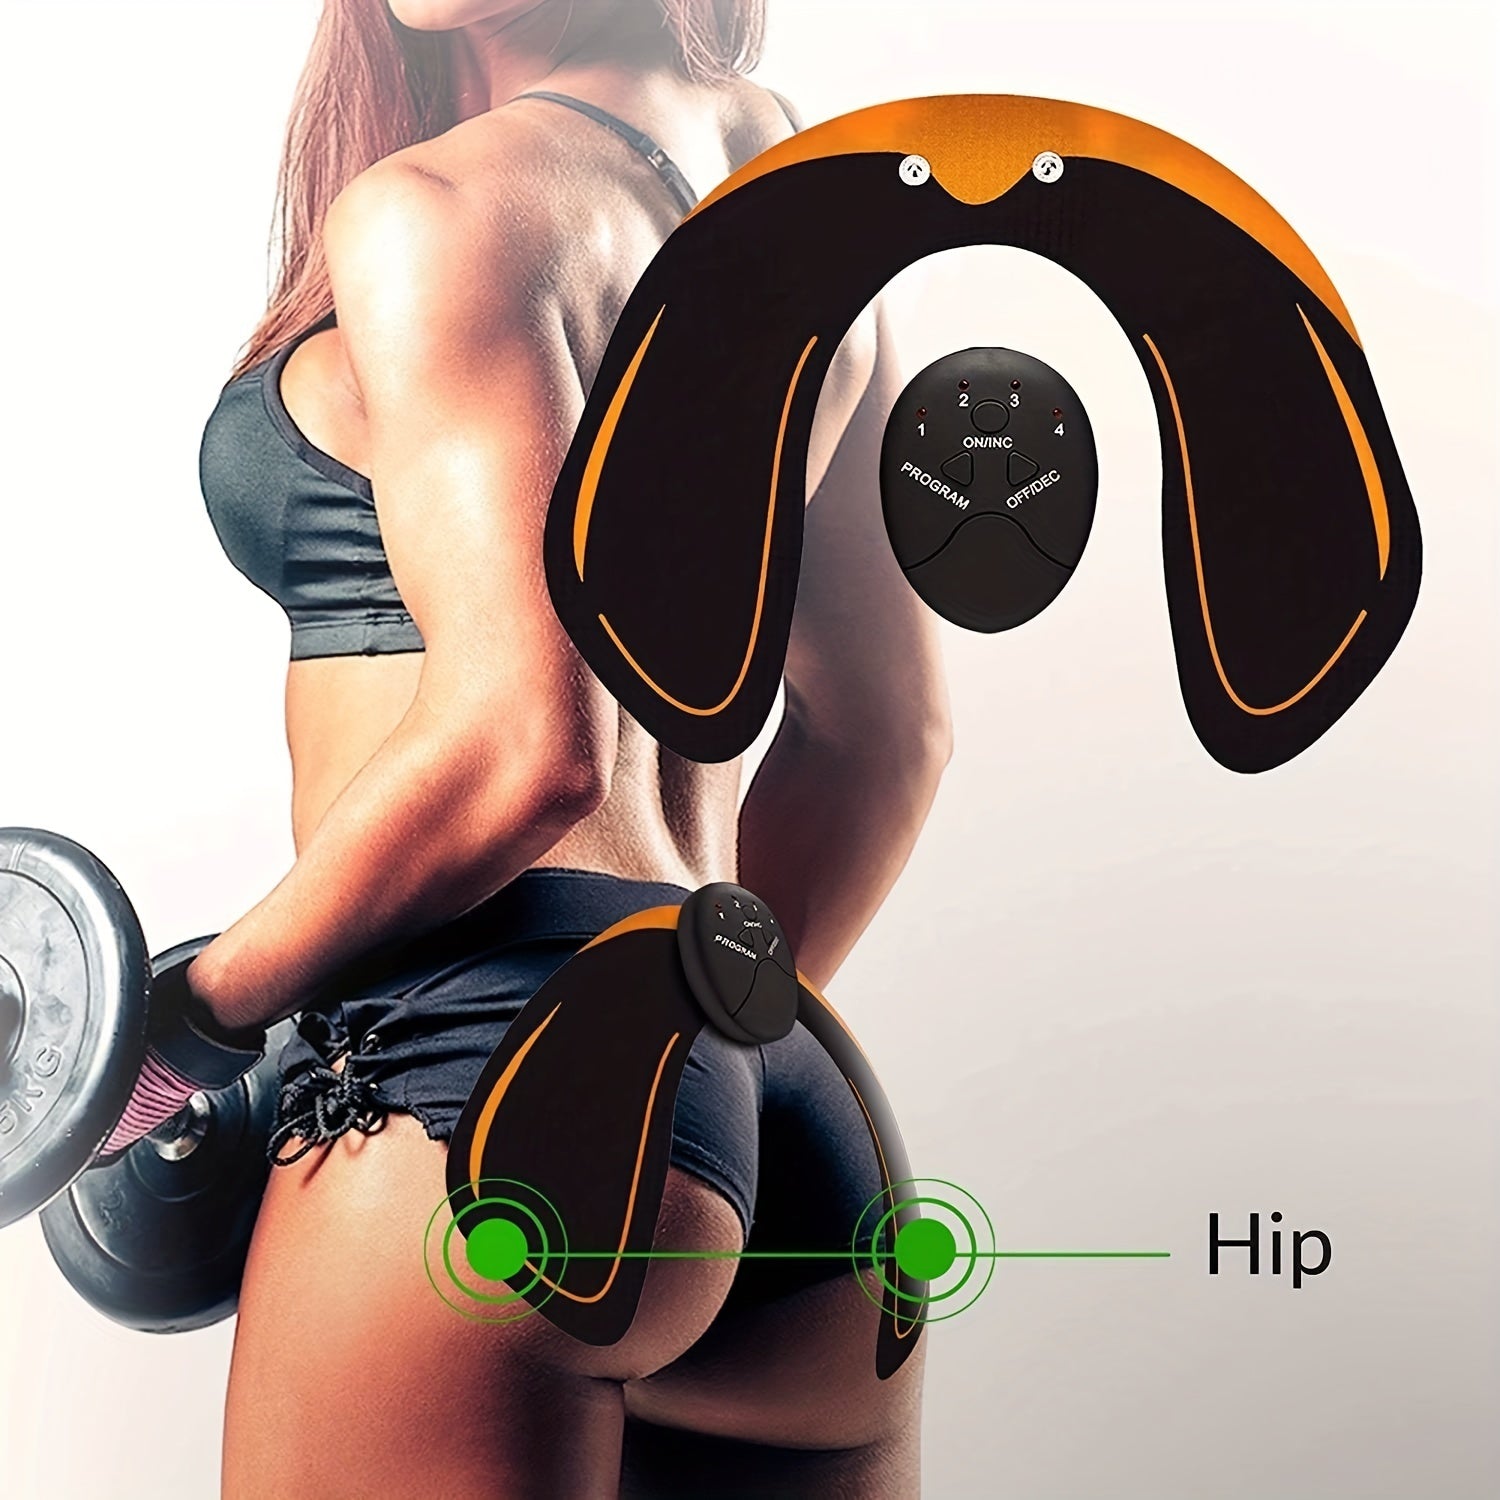 U-Shape Hip Trainer: Lift, Tone, and Massage Your Hip